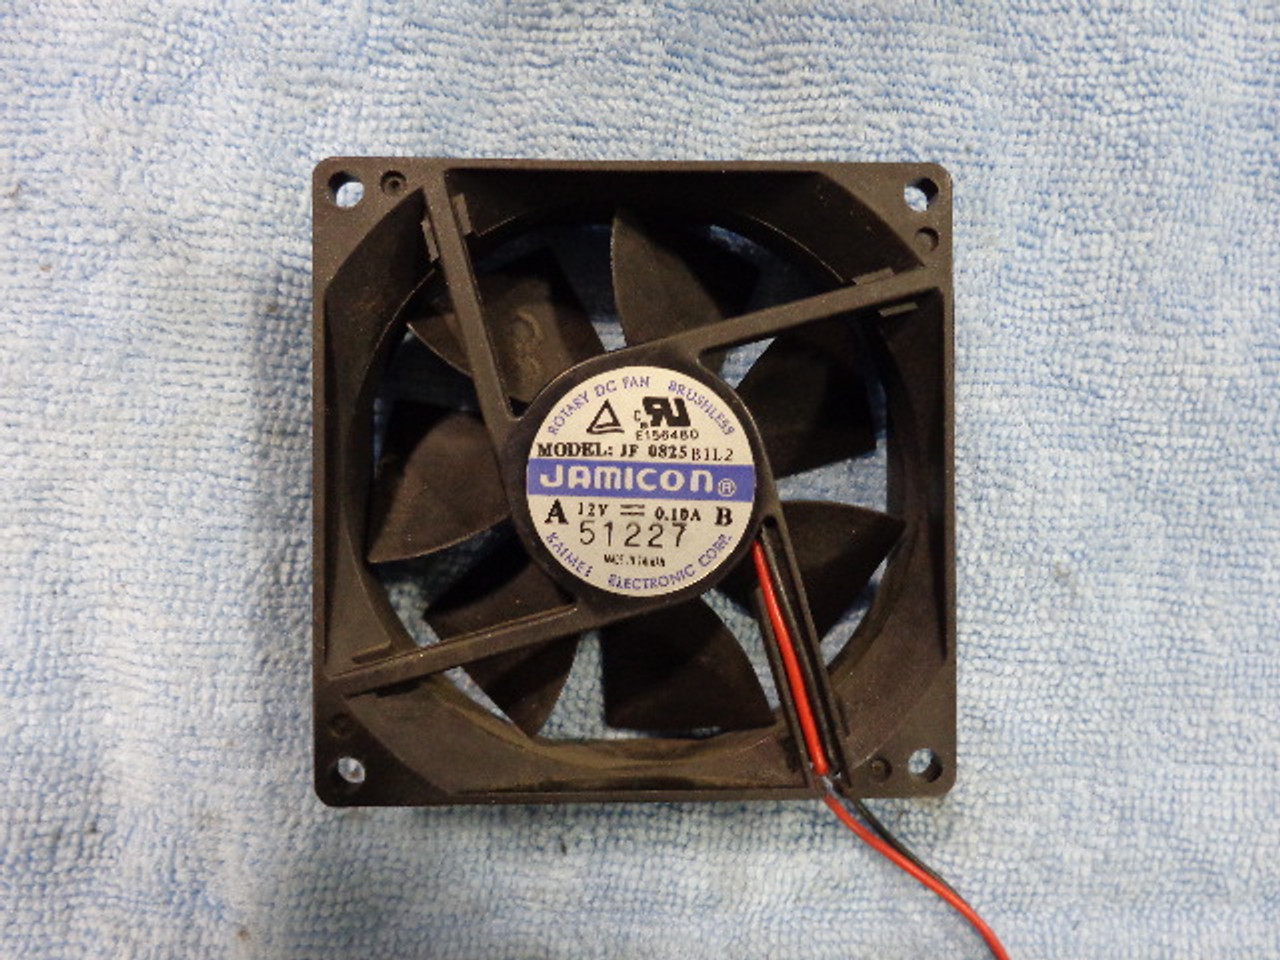 Kaimei Electronic Corp JF0825B1L2 Equipment Cooling Fan, 3.15" (80mm) Square x 1" Depth, 12 VDC1